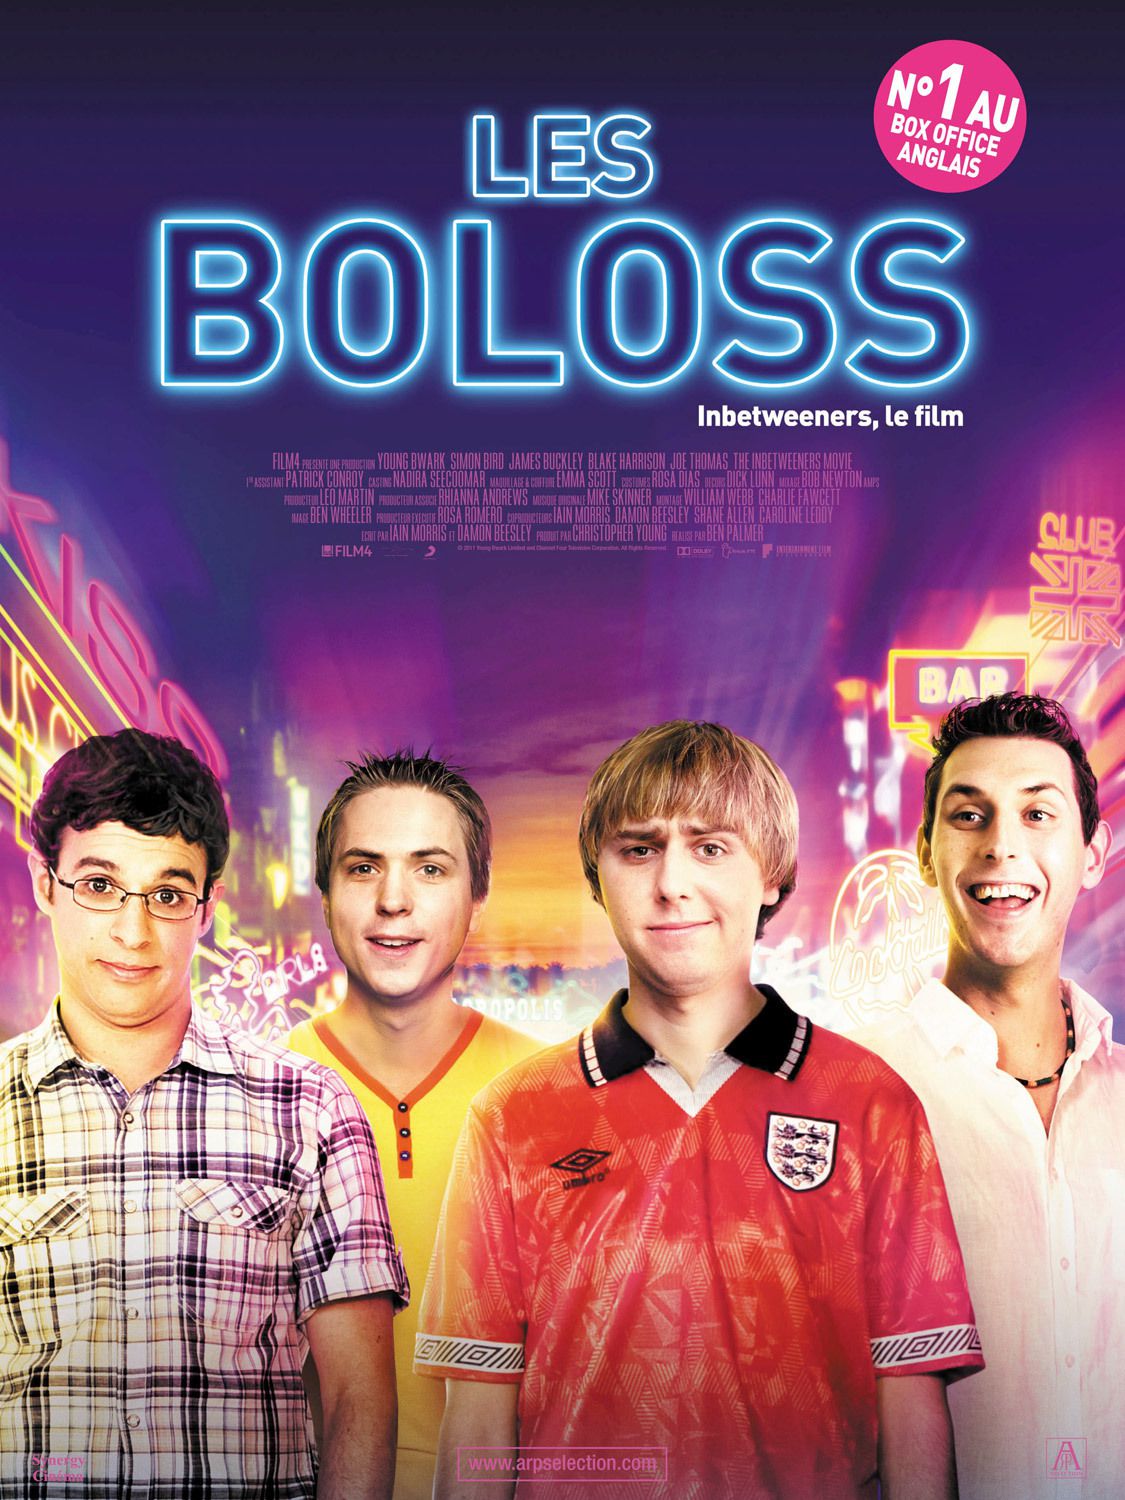 Les Boloss - Inbetweeners, le film - Film (2011) streaming VF gratuit complet